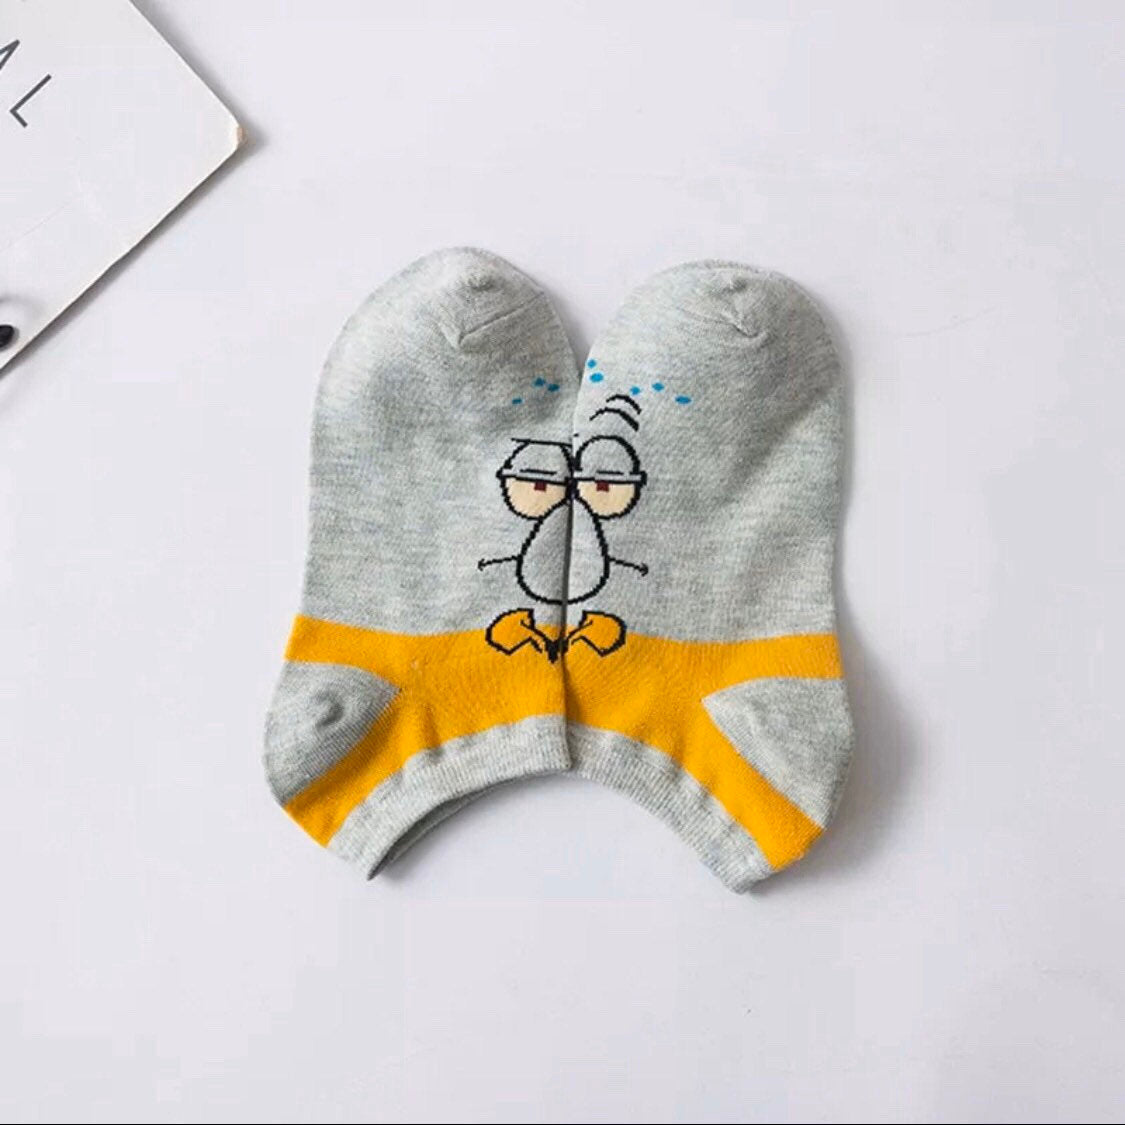 Spongebob & Friends Socks